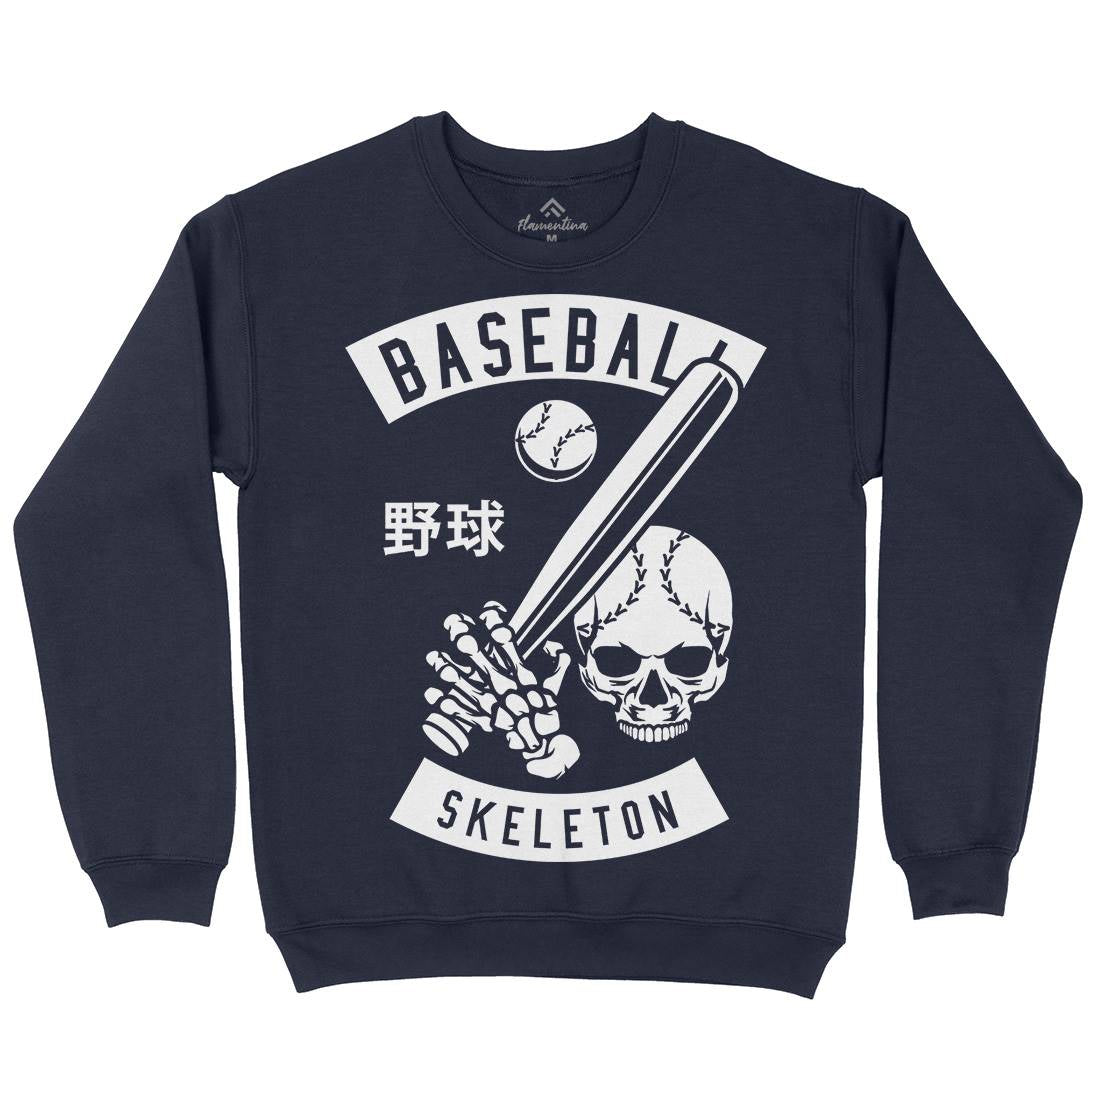 Baseball Skeleton Mens Crew Neck Sweatshirt Sport B489